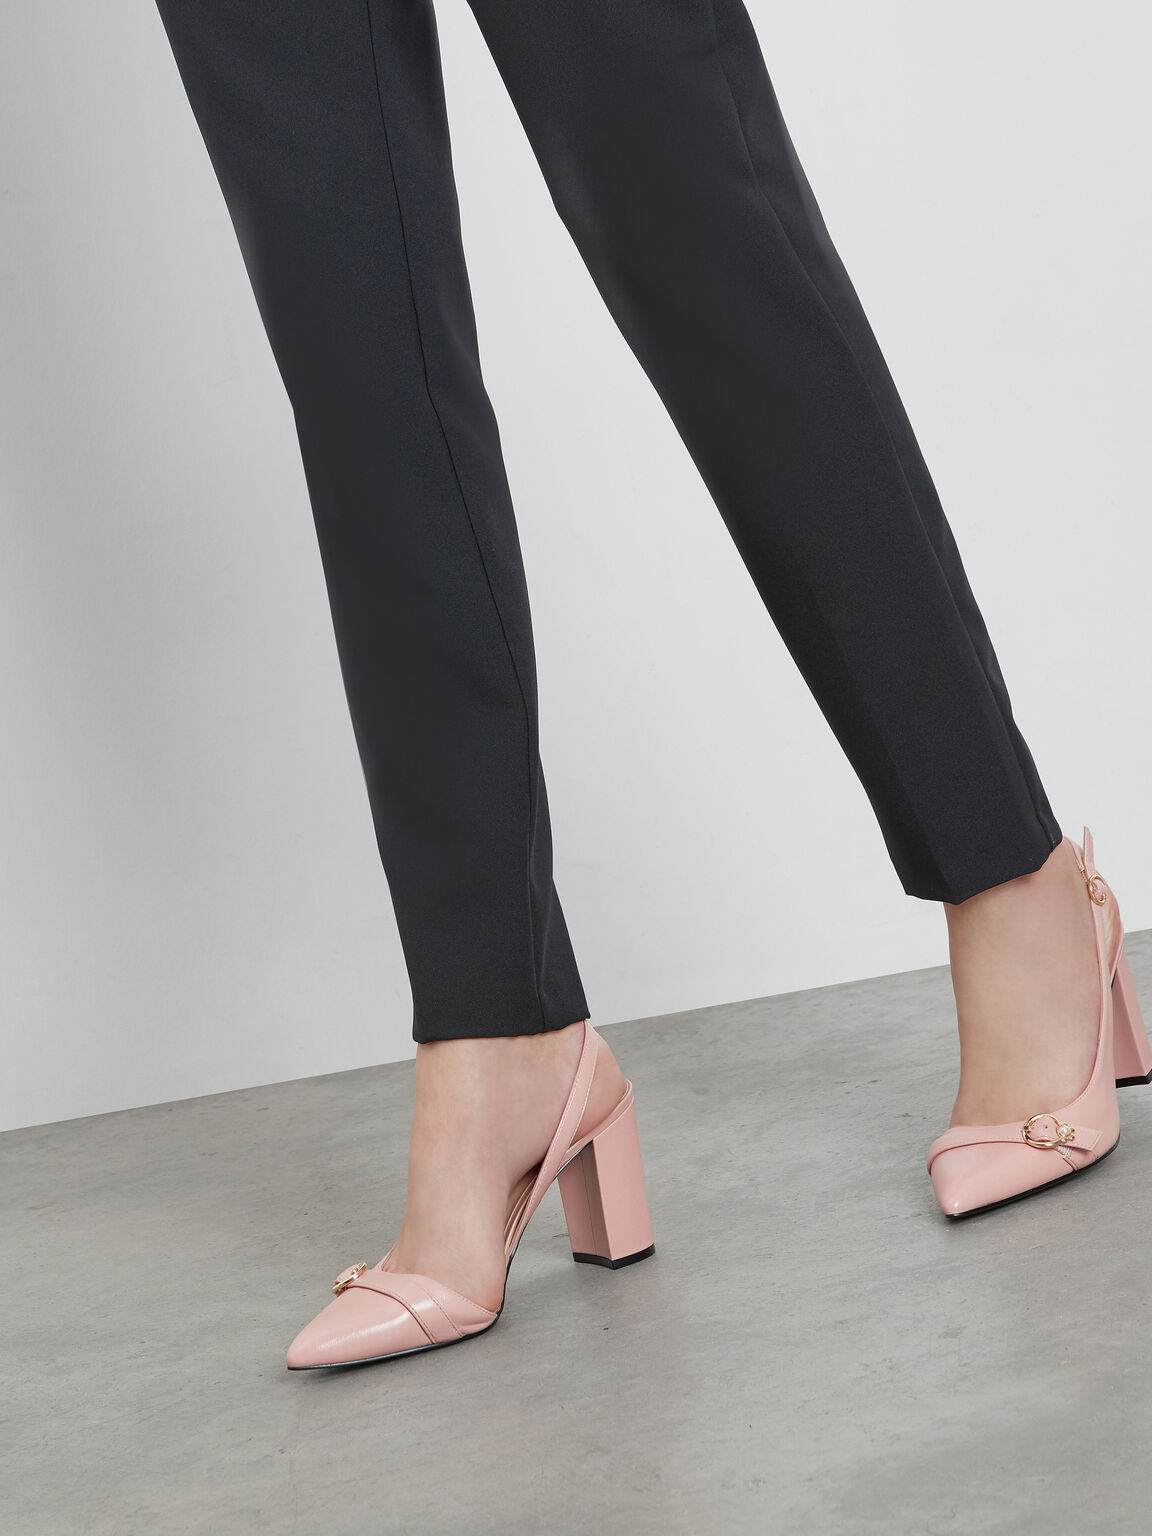 Embellished Asymmetrical Heels, Peach, hi-res